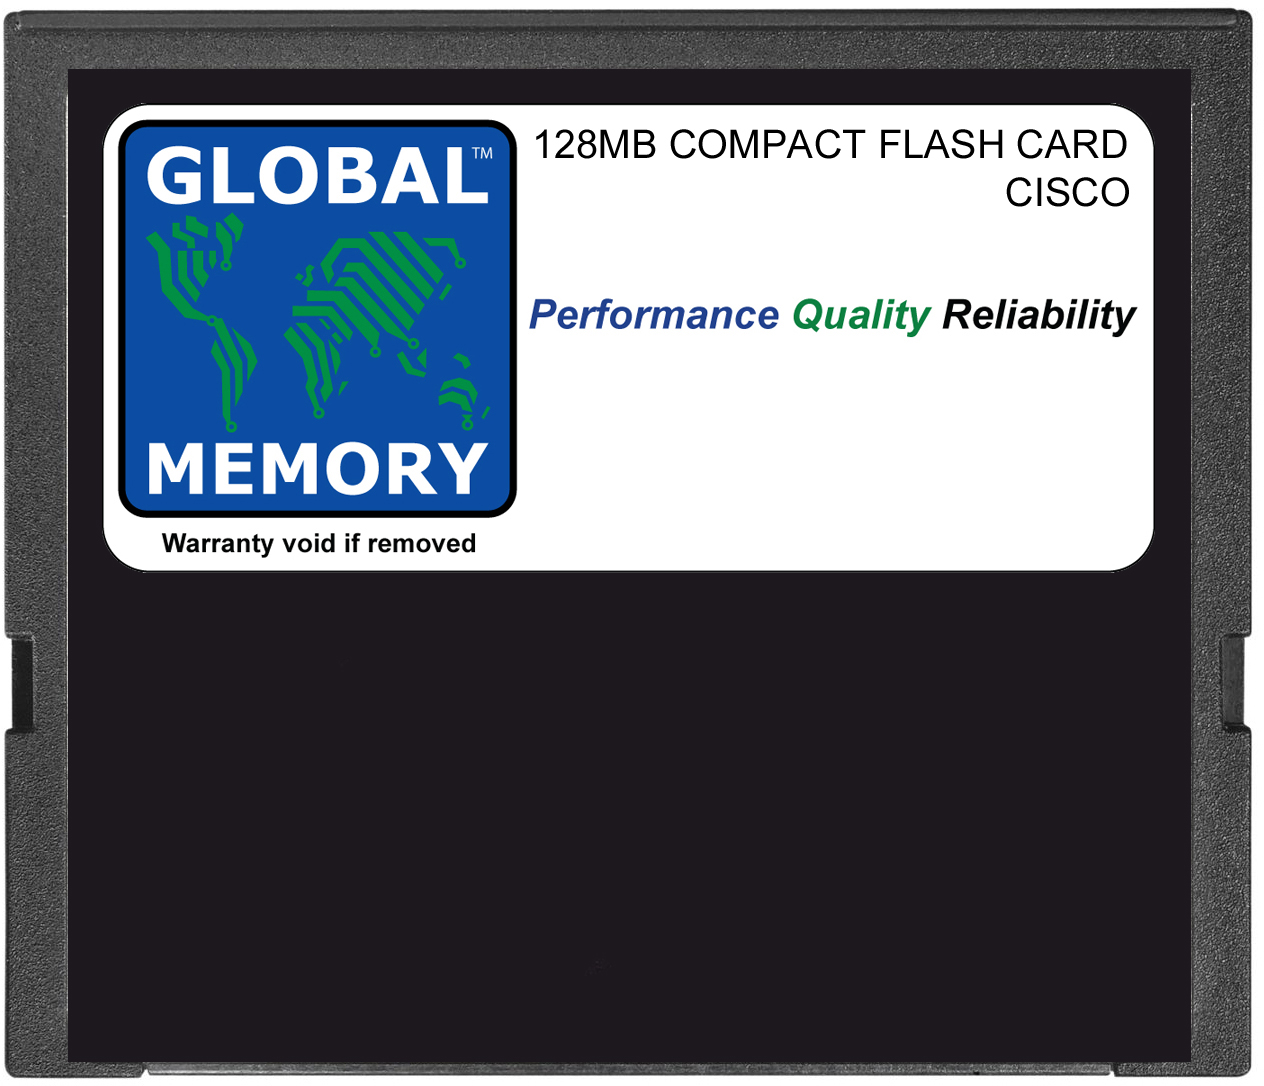 128MB COMPACT FLASH CARD MEMORY FOR CISCO 7400 ASR / 7400 VPN ROUTERS (MEM-COMP-FLD128M)